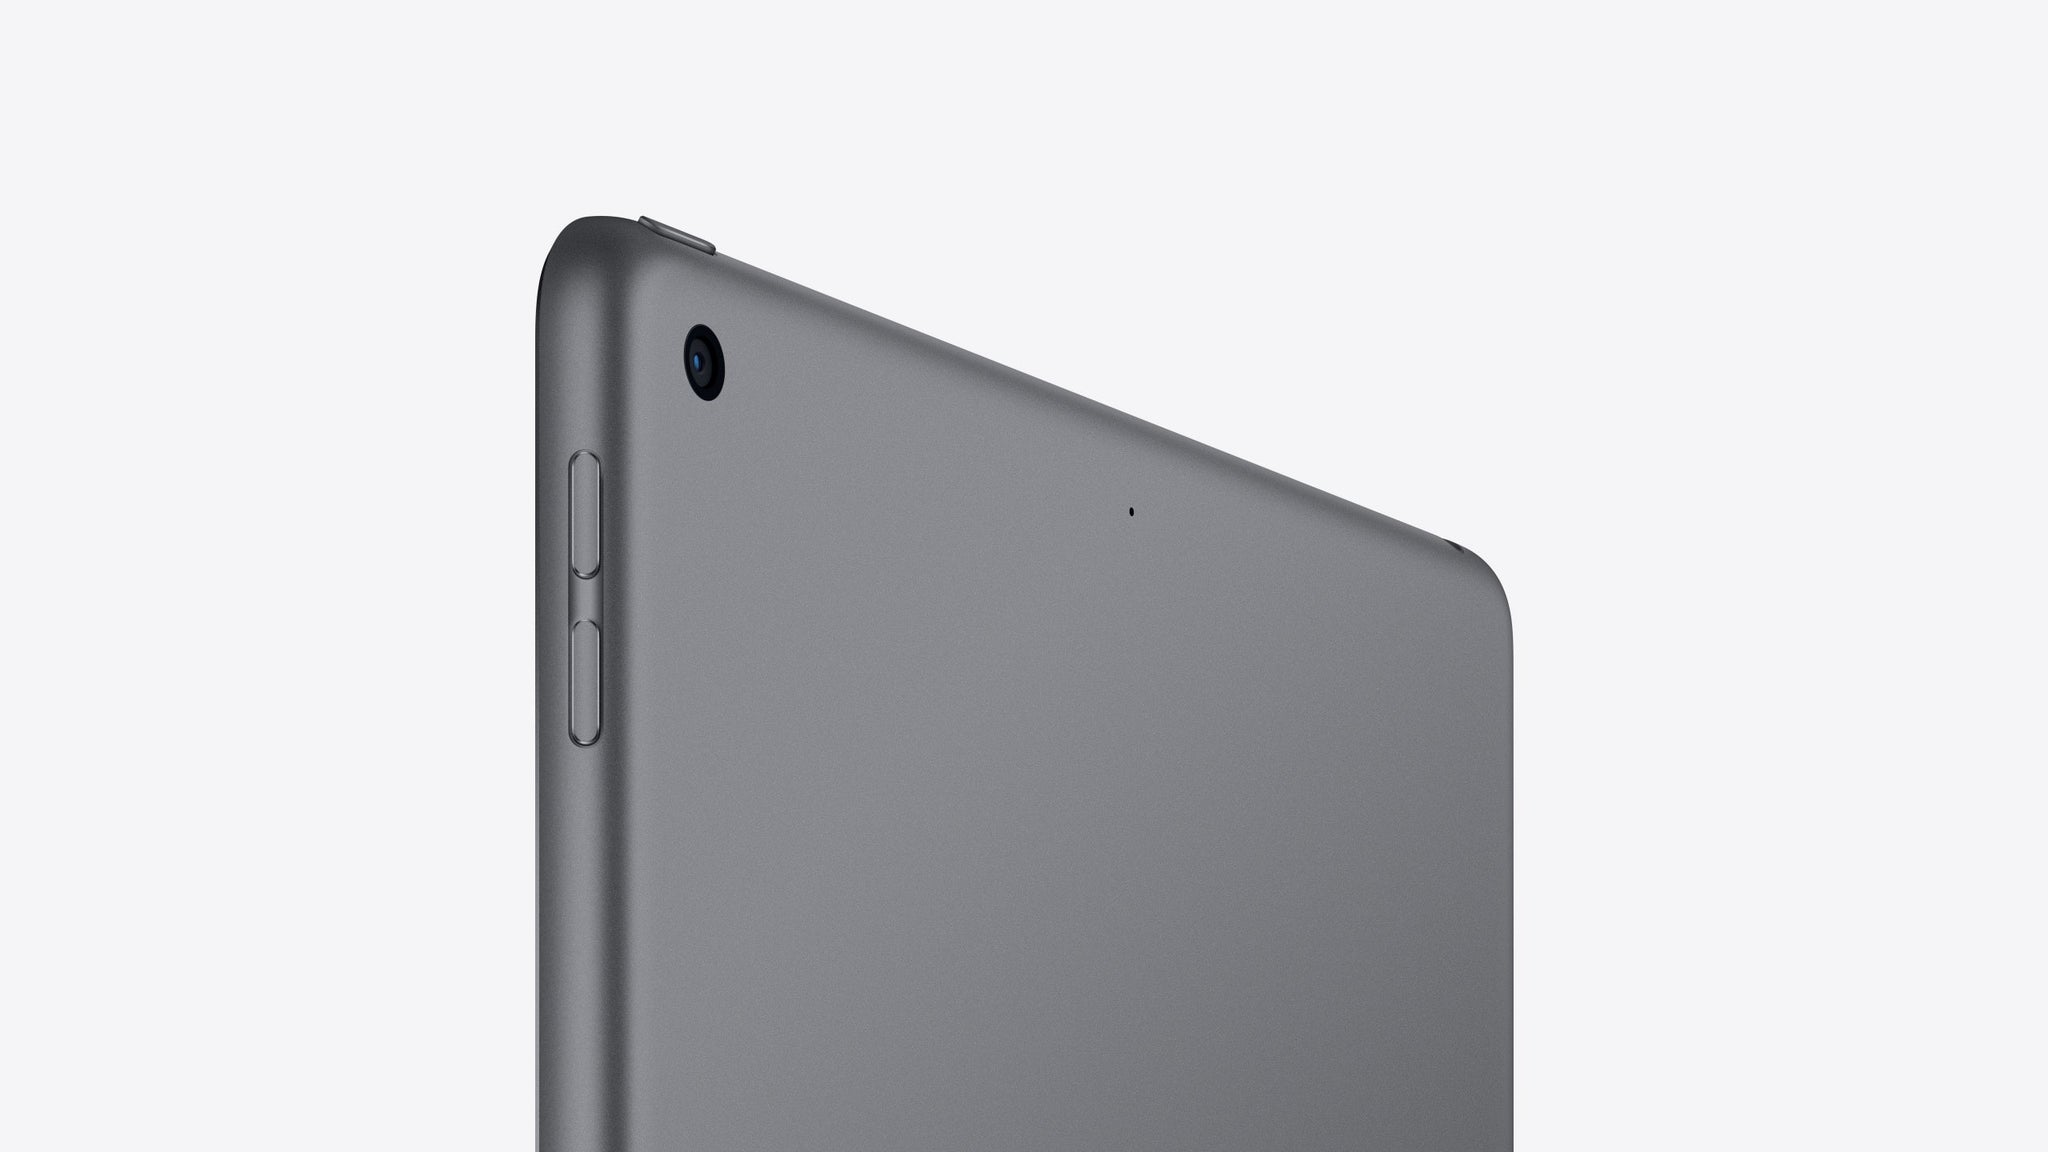 Apple 2020 iPad Air (10.9-inch, Wi-Fi, 64GB) - Space Gray (4th Generation)